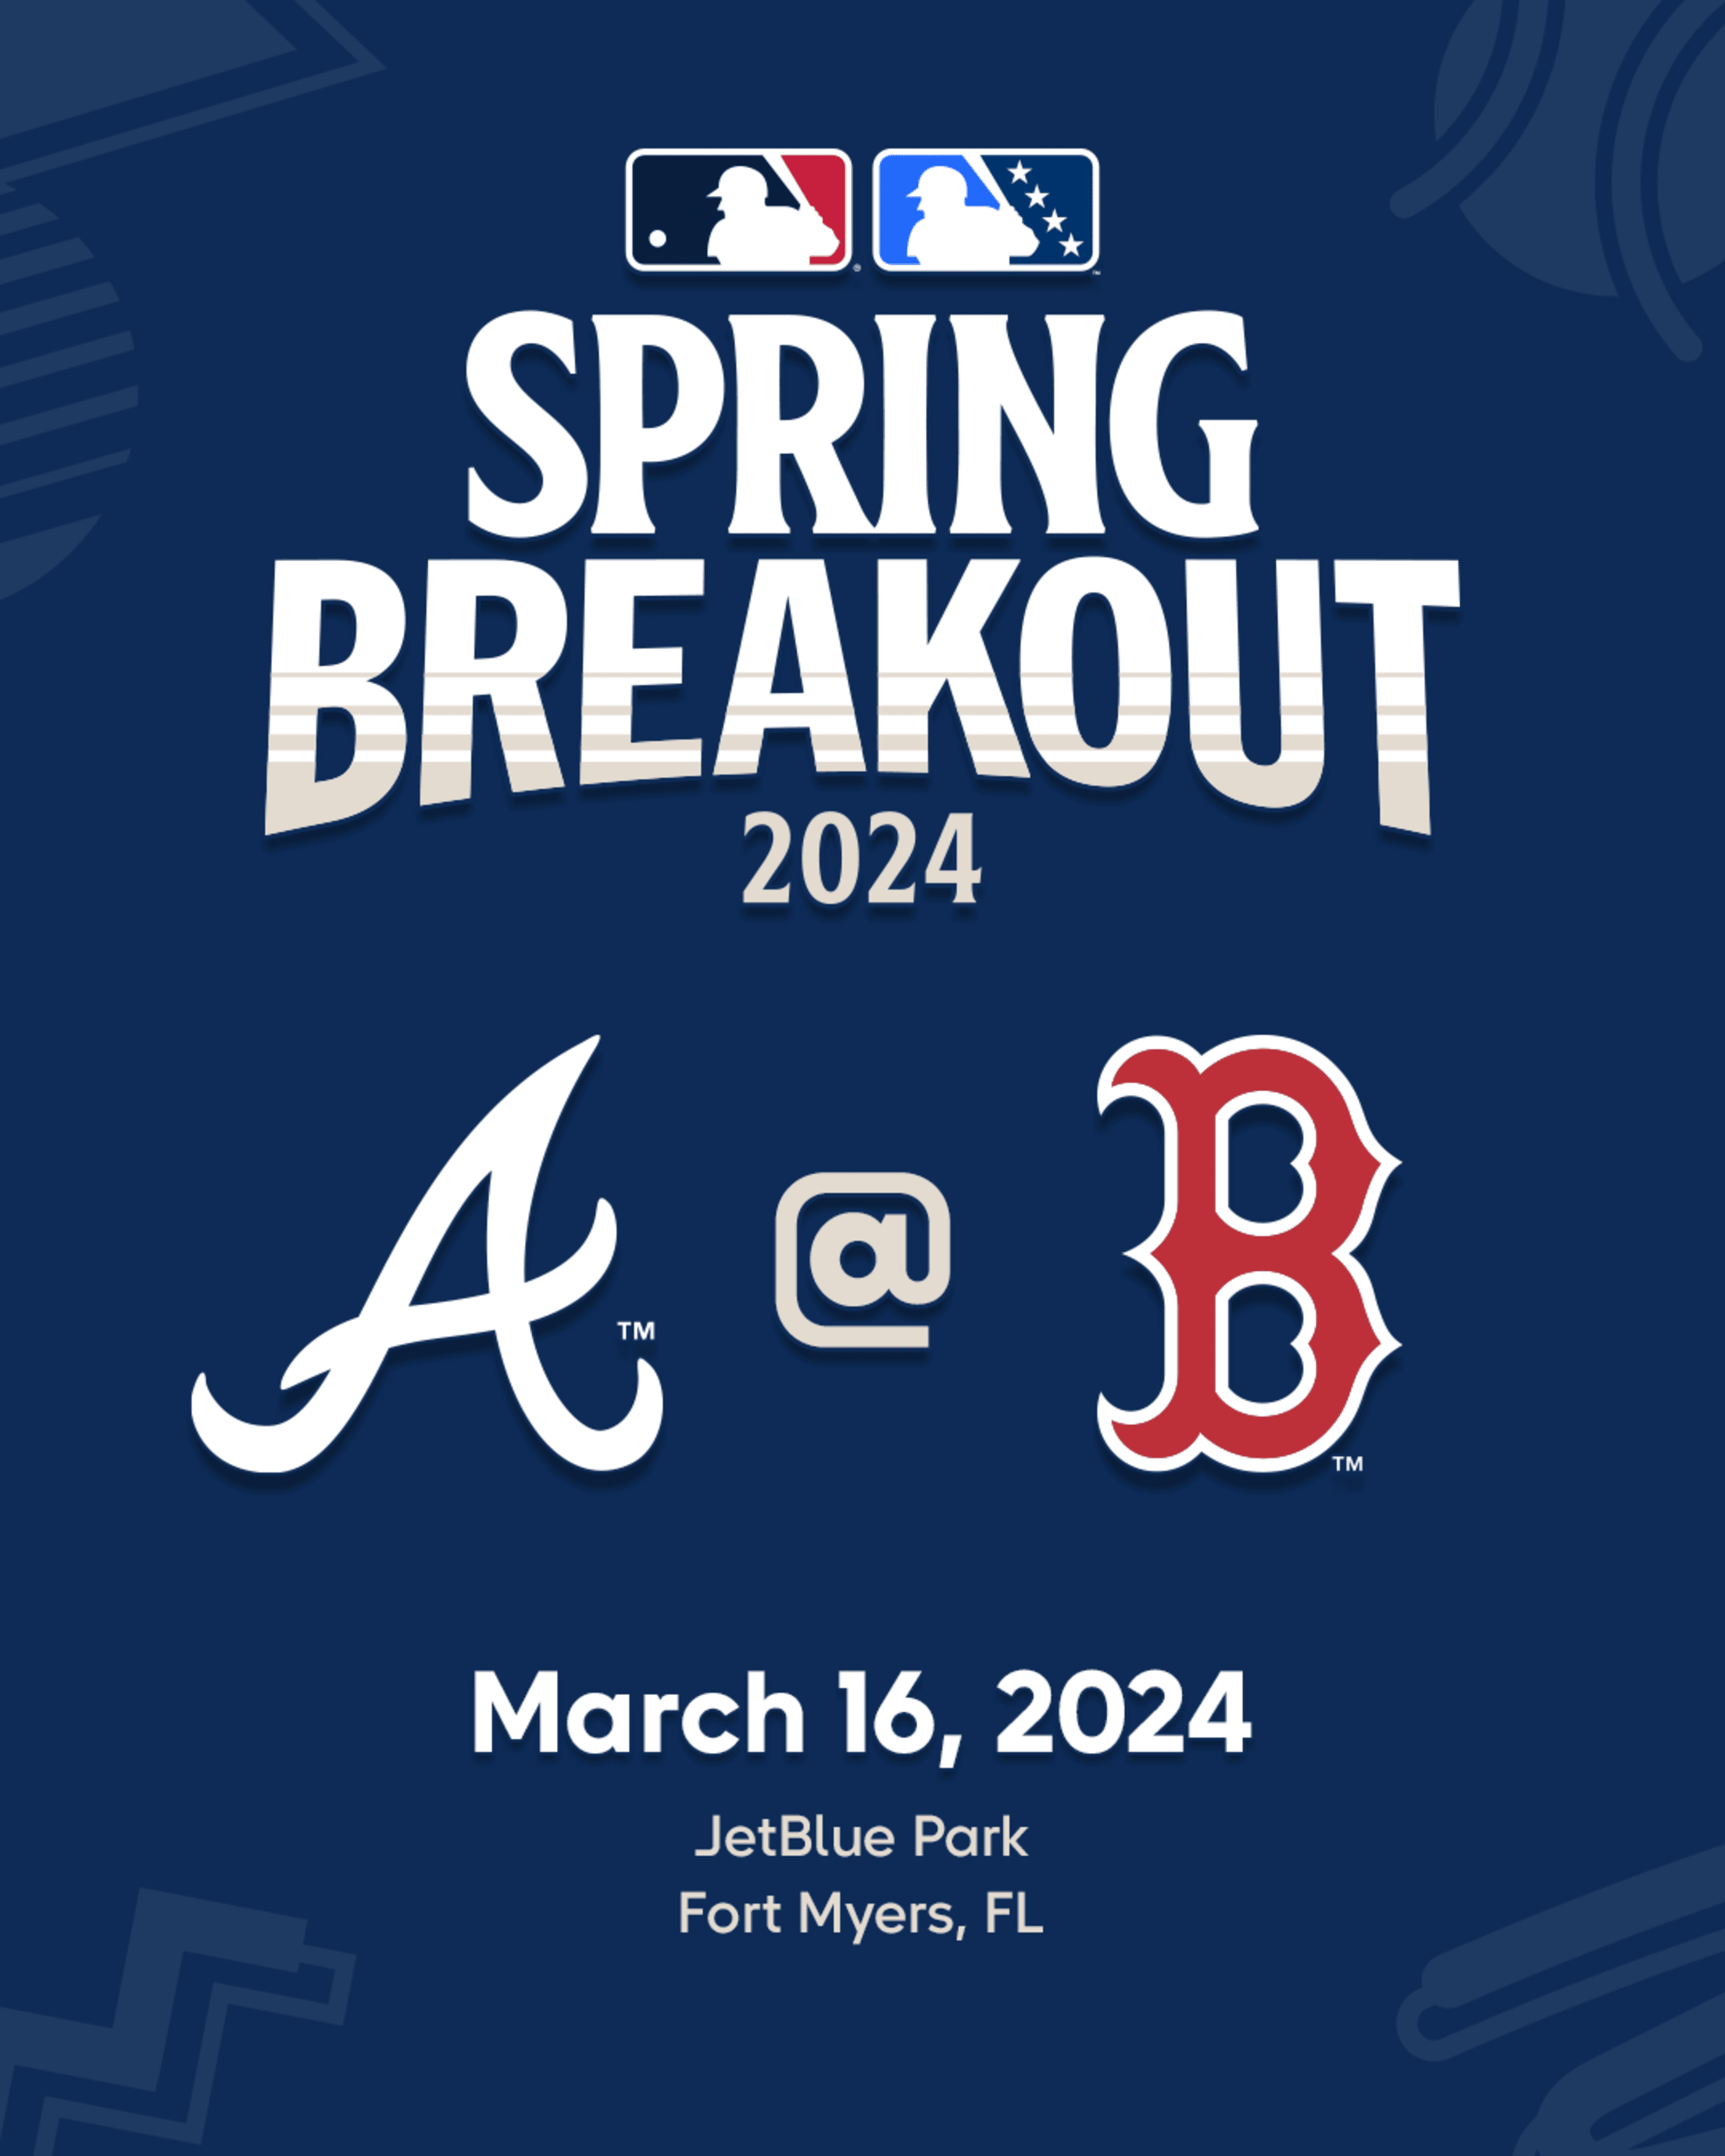 Spring training schedule 2024 in Florida, MLB ticket info